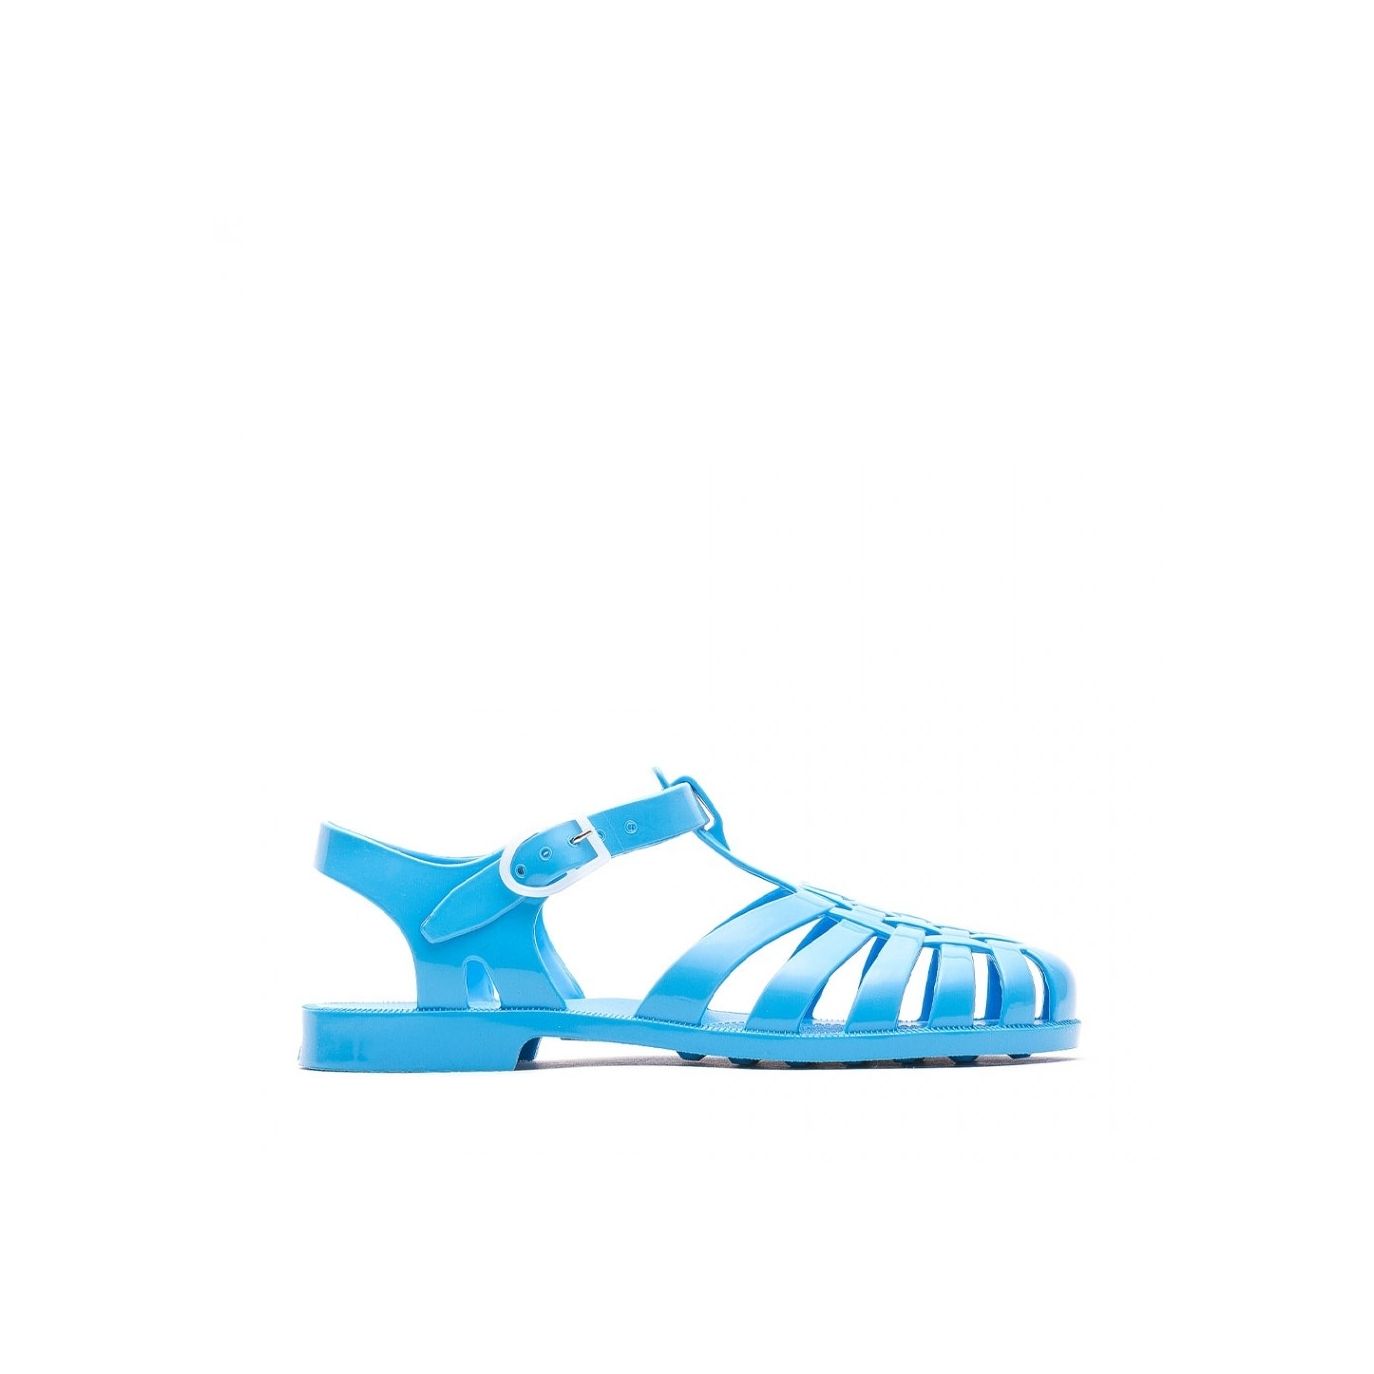 Meduse - Sandals Sun Cyan blue - Sandalias - 6078108